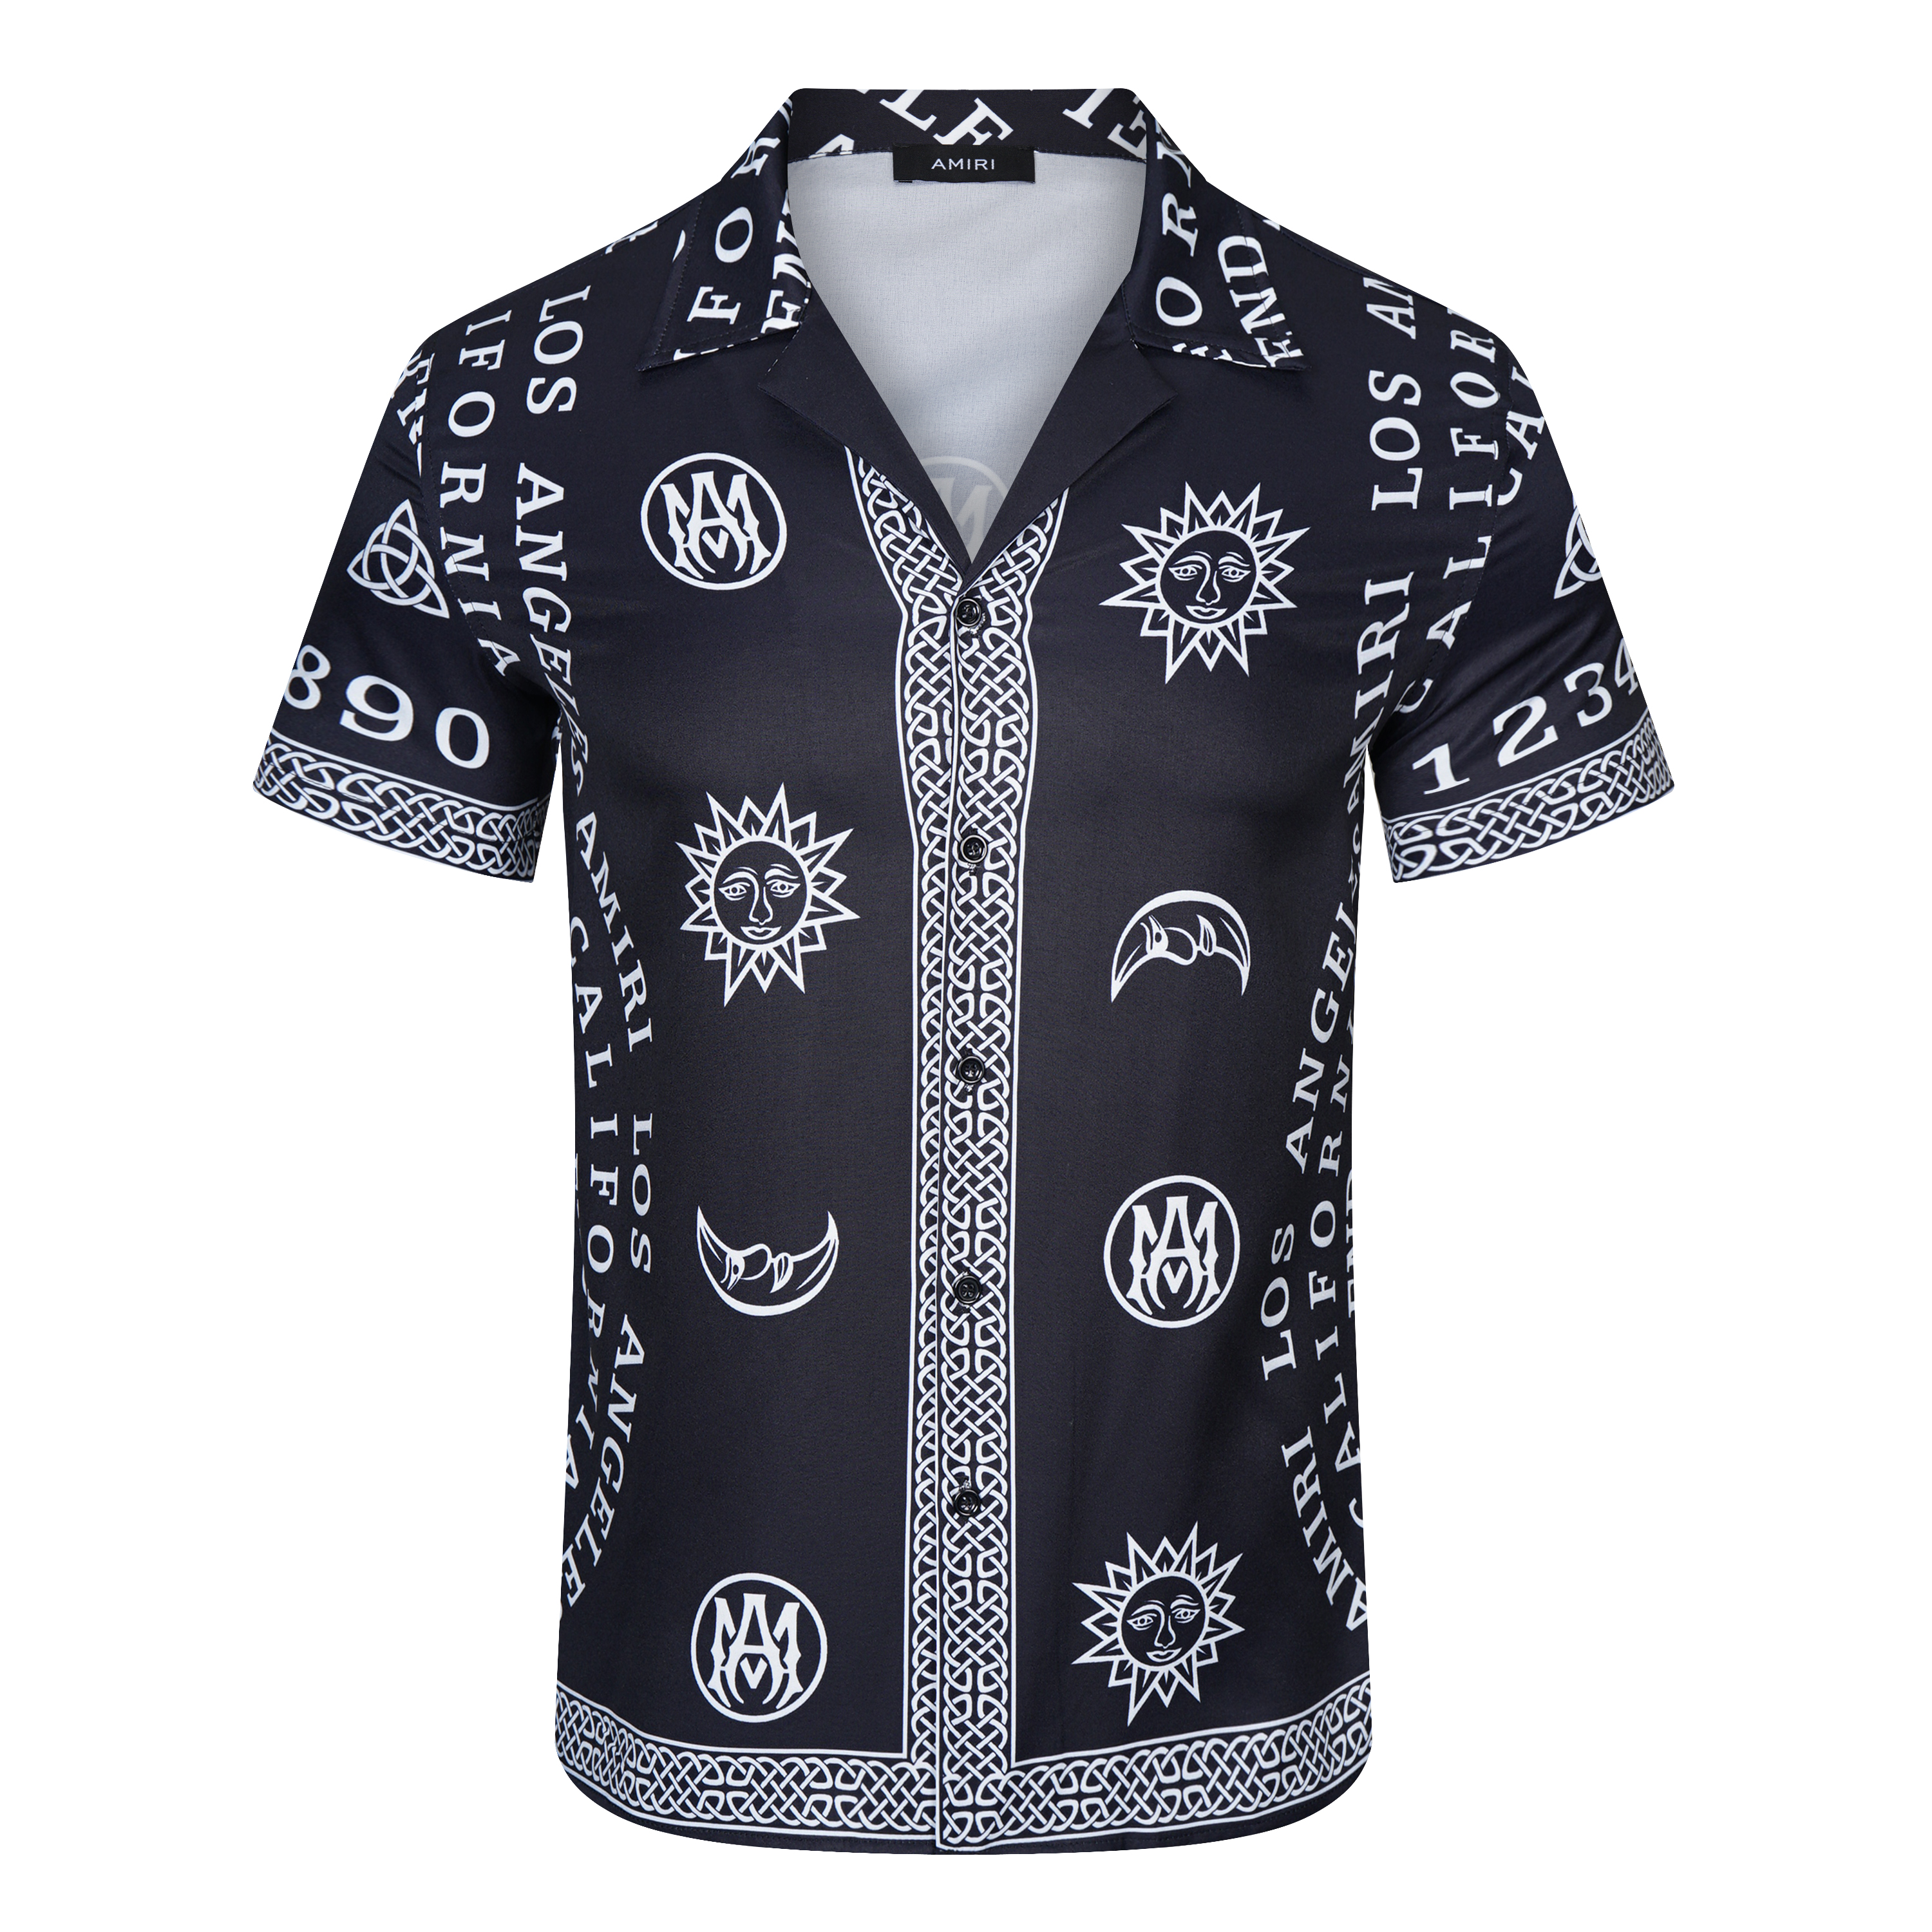 Amiri Short Sleeve Shirts Unisex # 265019, cheap Amiri Shirts, only $32!